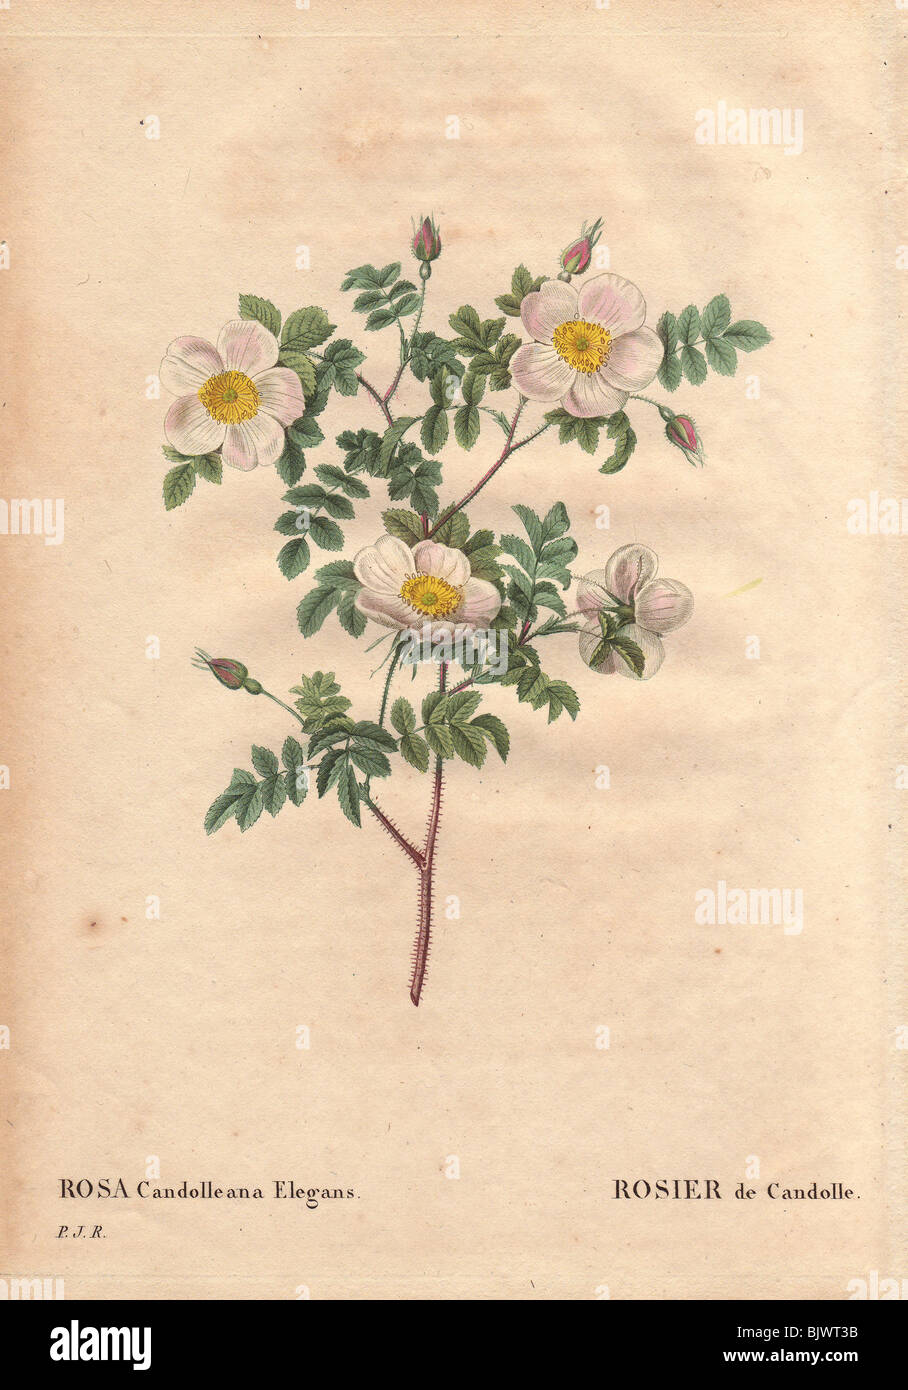 De Candolle's white rose or Rosier de Candolle (Rosa candolleana elegans). Stock Photo